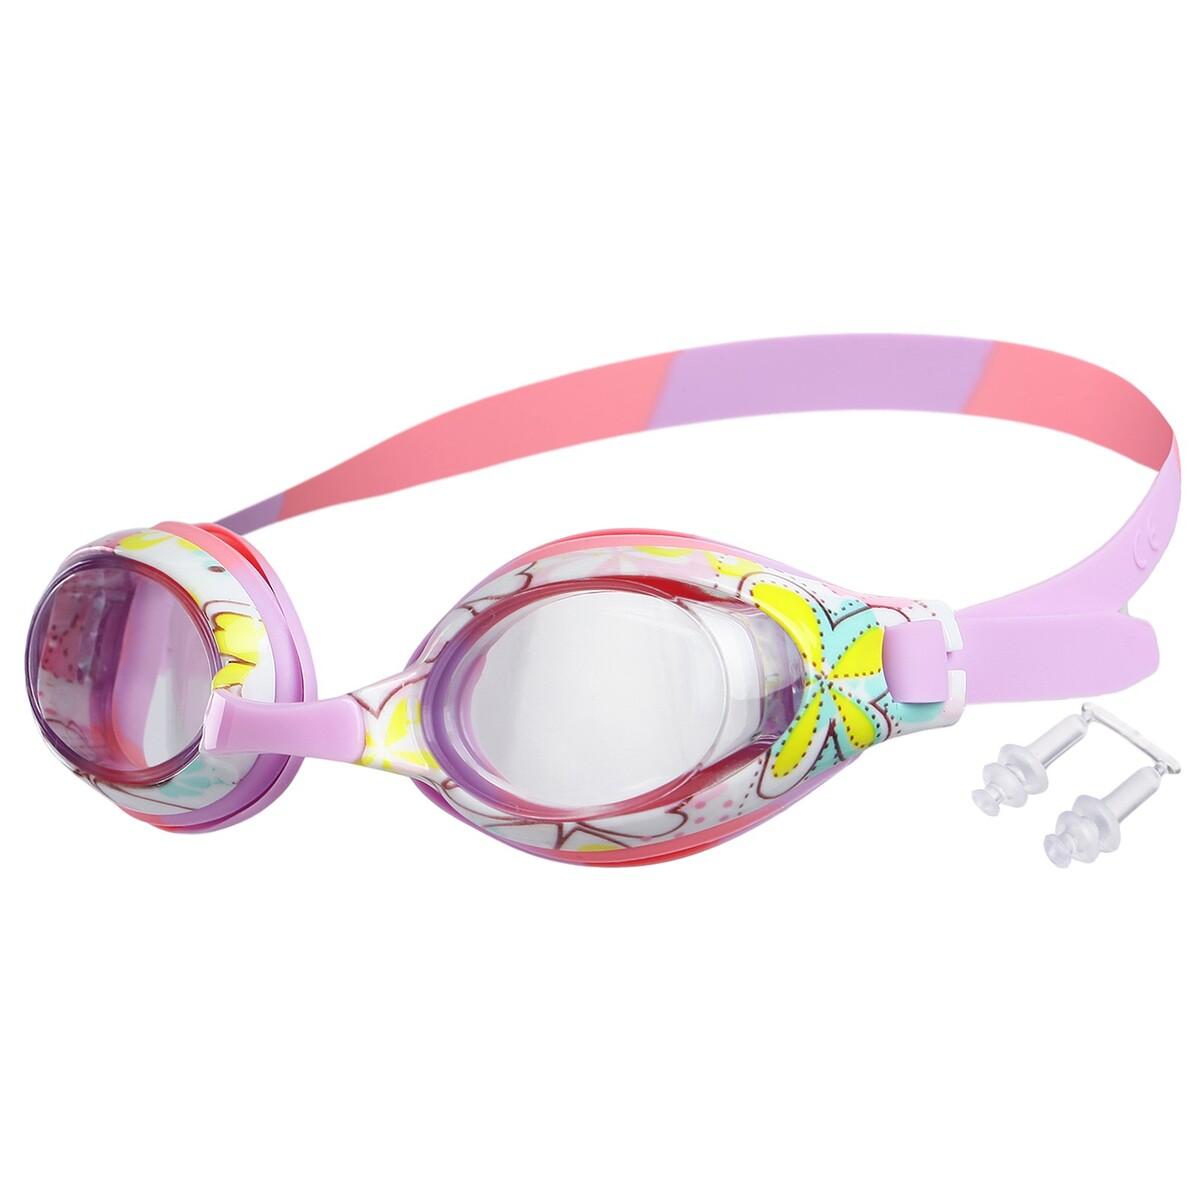 Очки для плавания детские onlytop, беруши очки для плавания дельфин беруши детские голубой